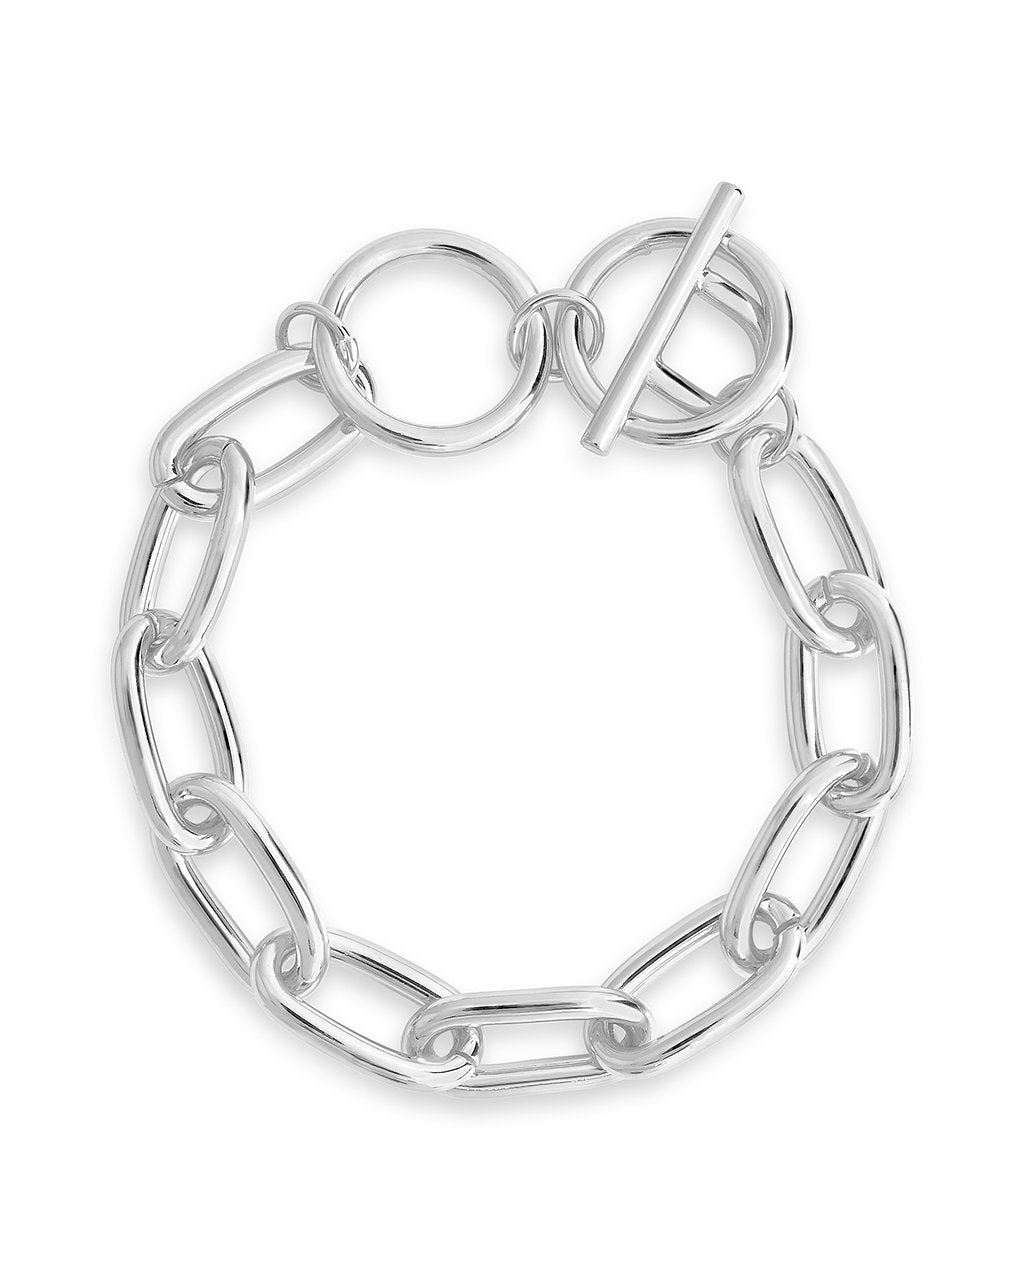 Linked Toggle Bracelet